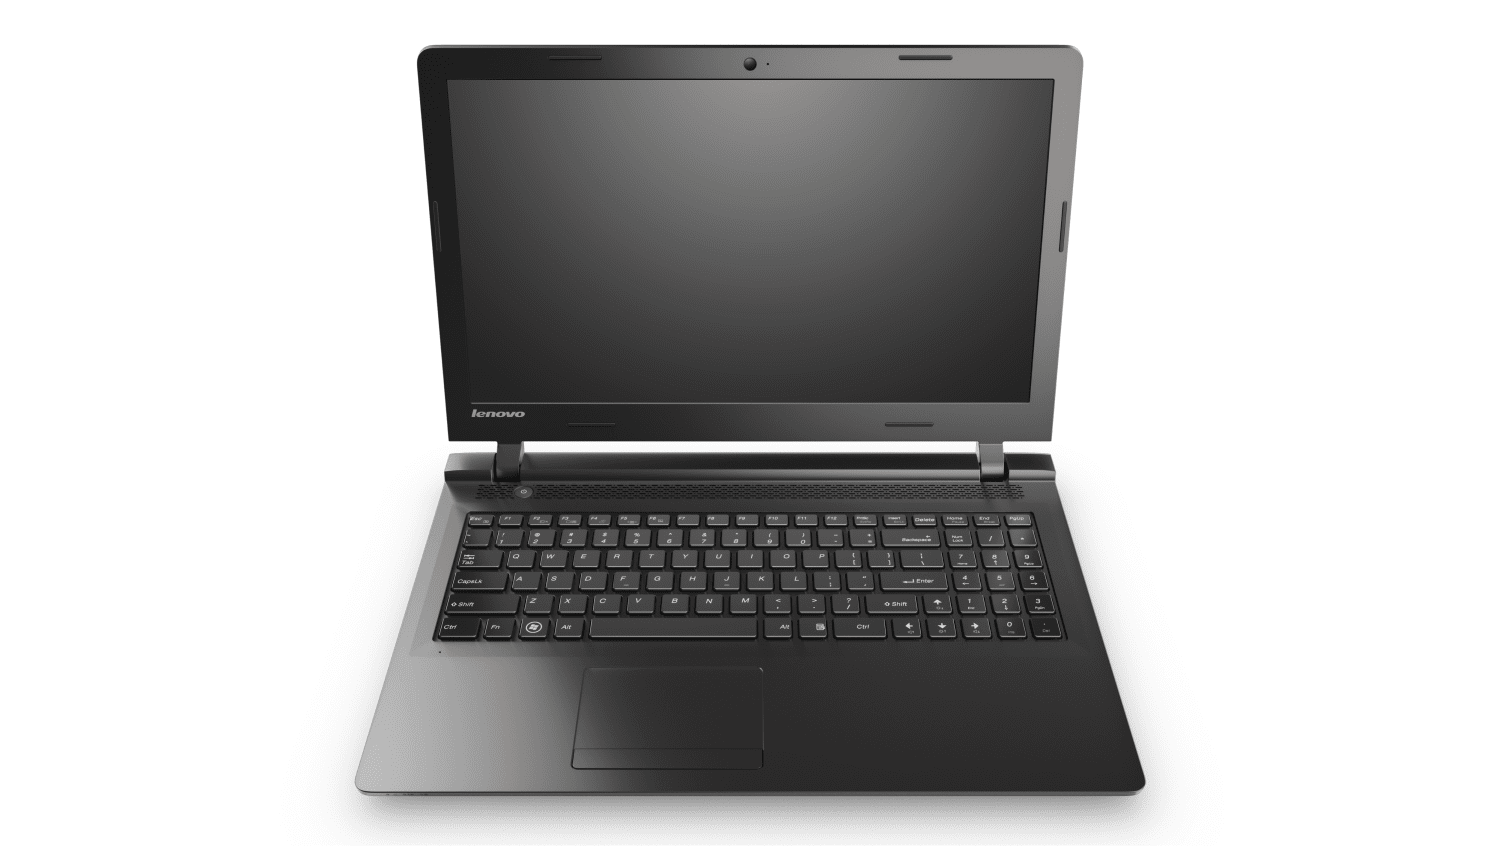 Ноутбук Леново B50 10 Цена